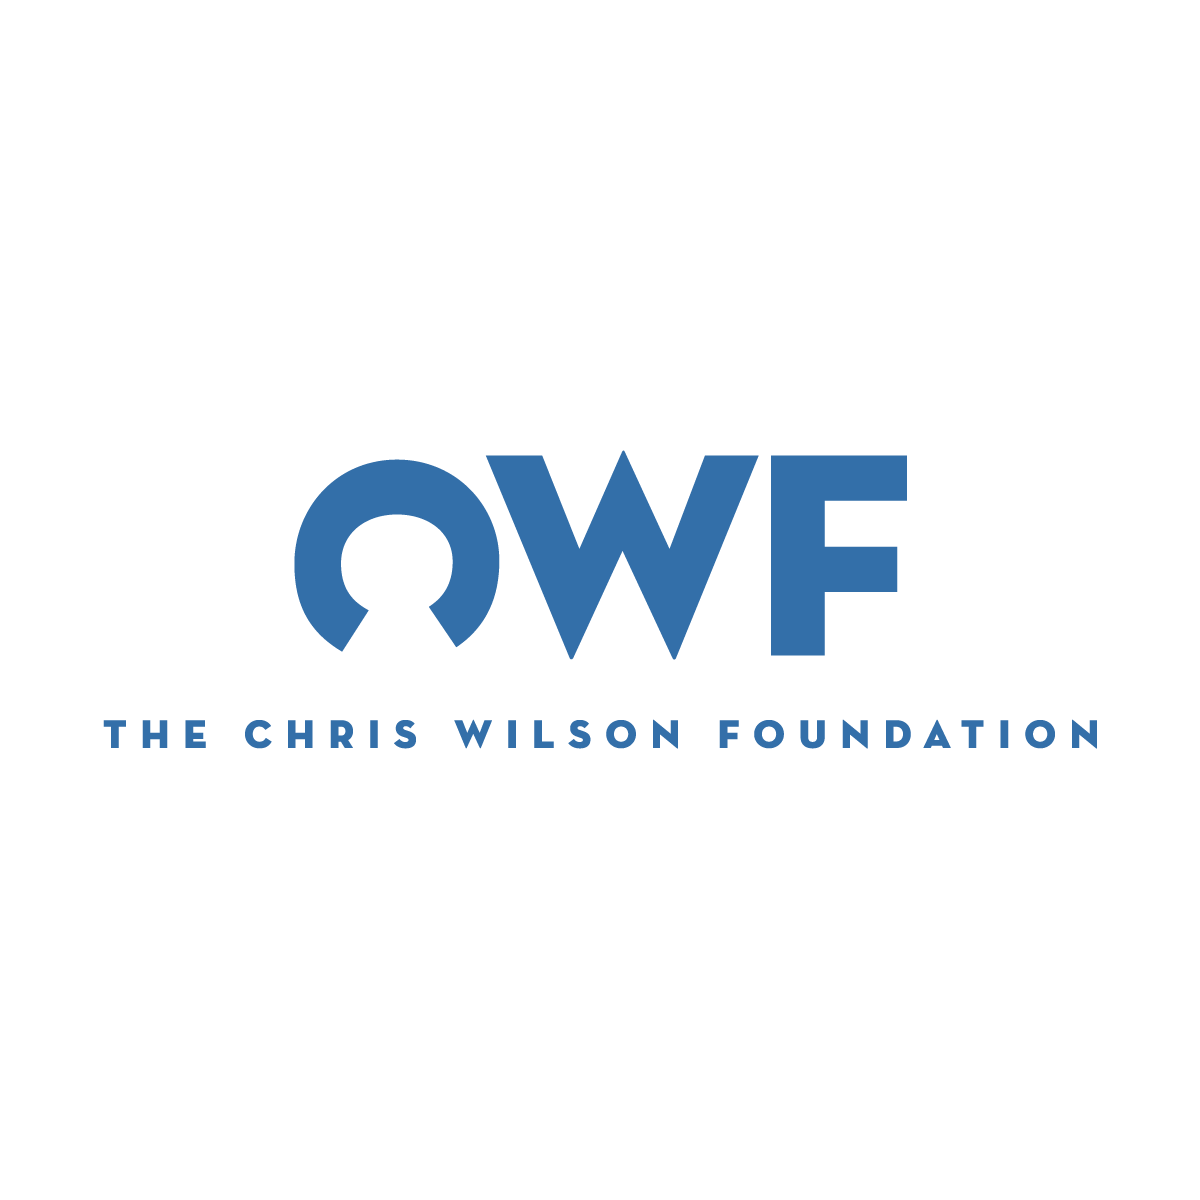 The Chris Wilson Foundation logo